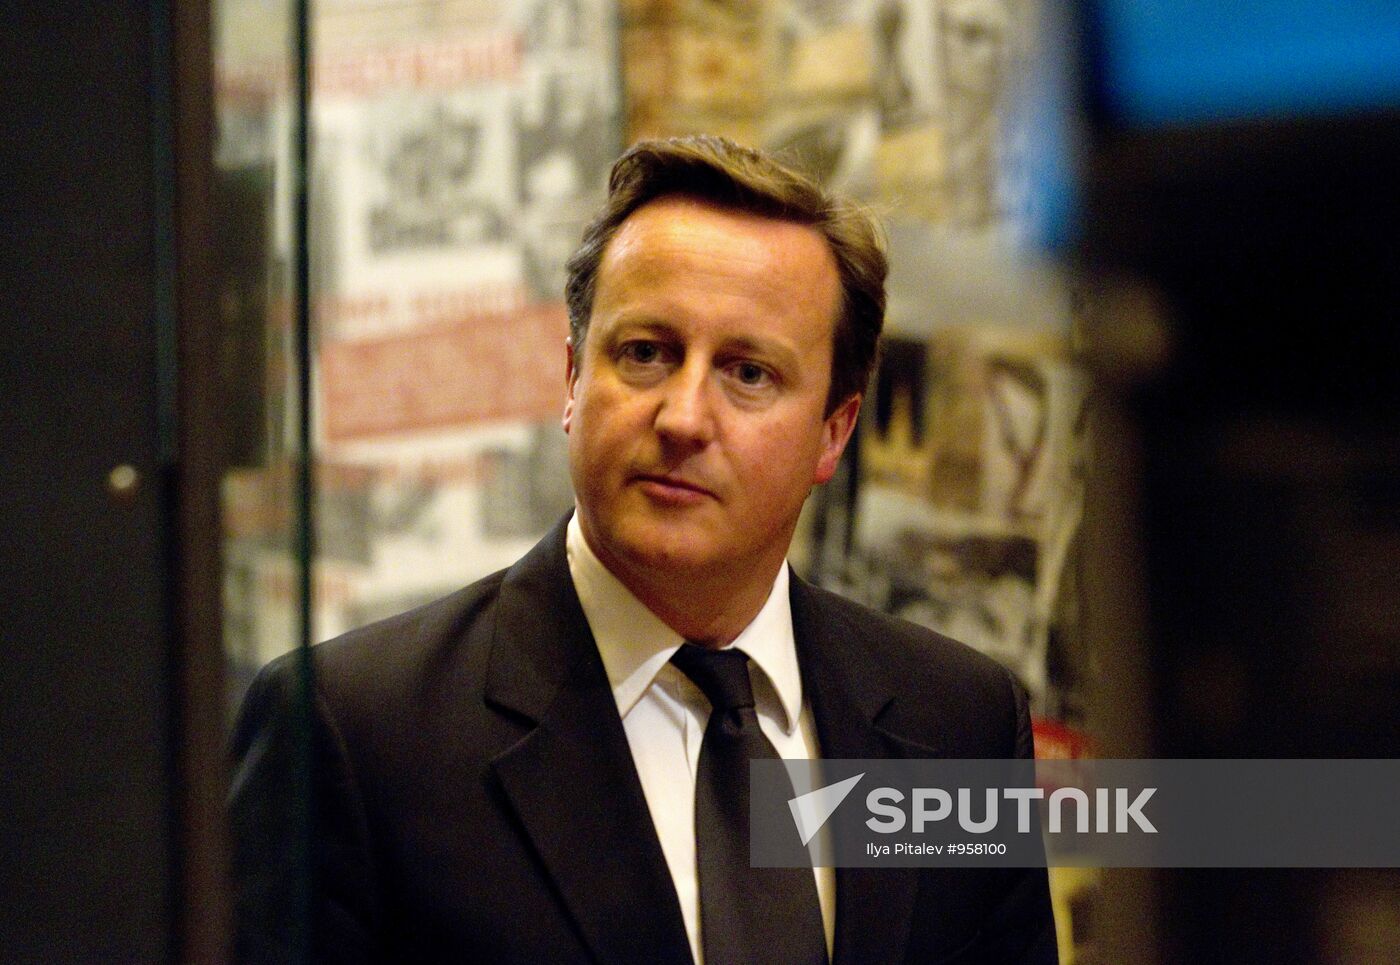 British Prime Minister David Cameron visits Sakharov Center